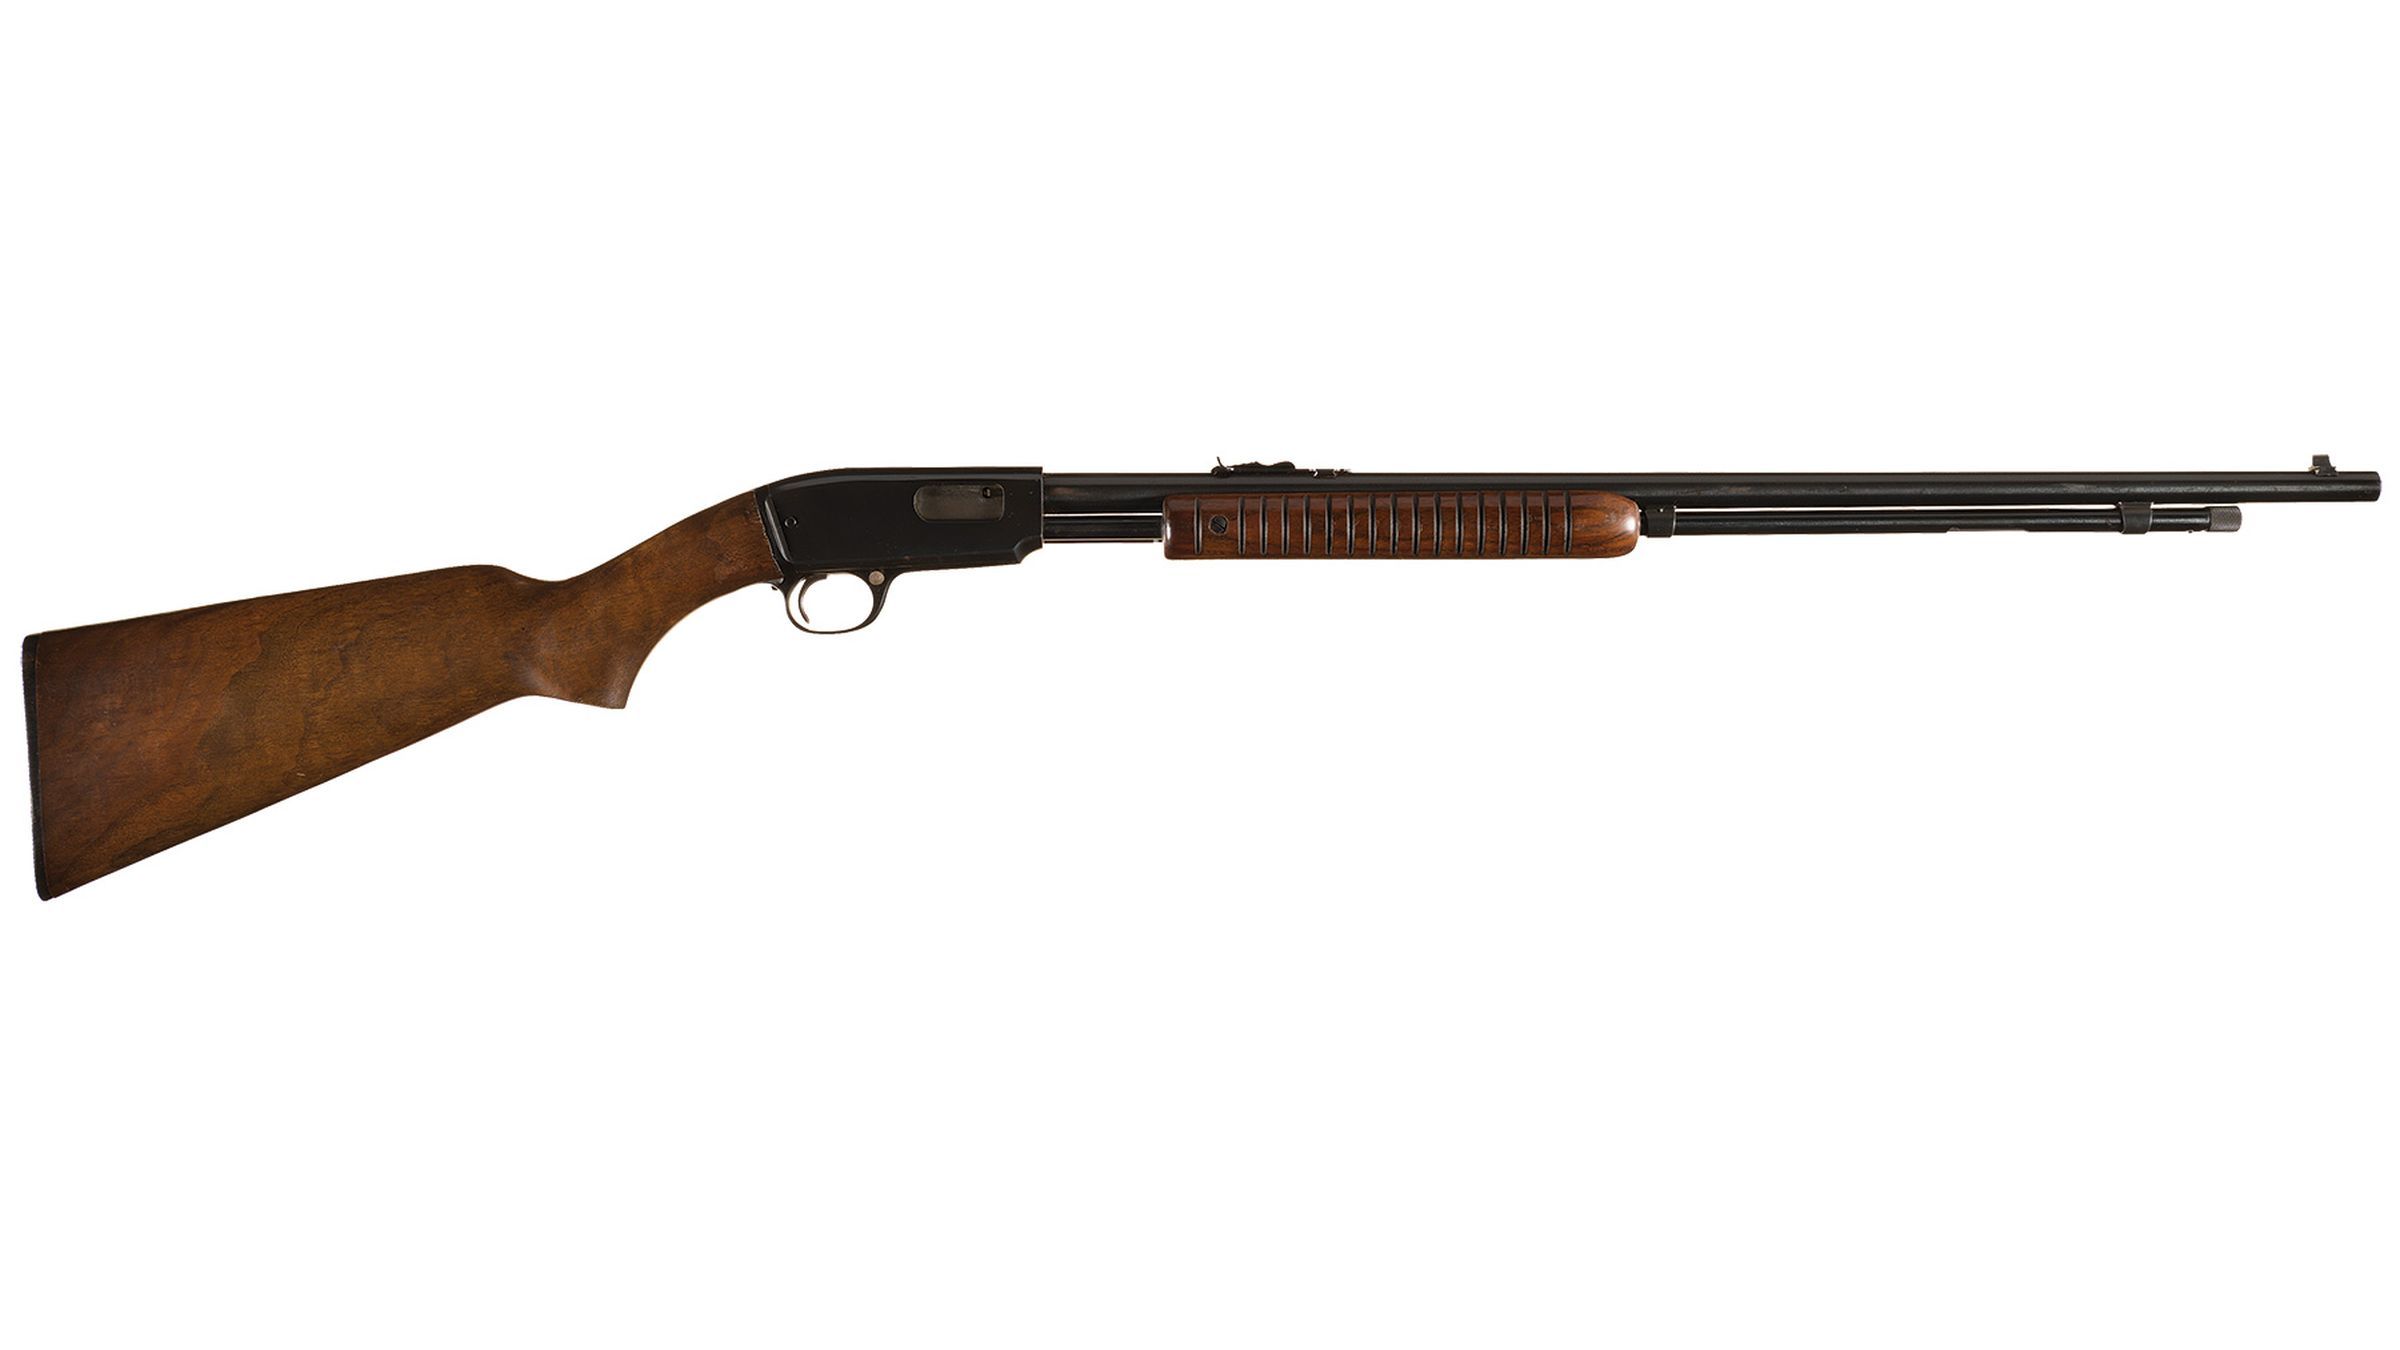 Pistol type grip for my winchester model 25 - maxxxaser